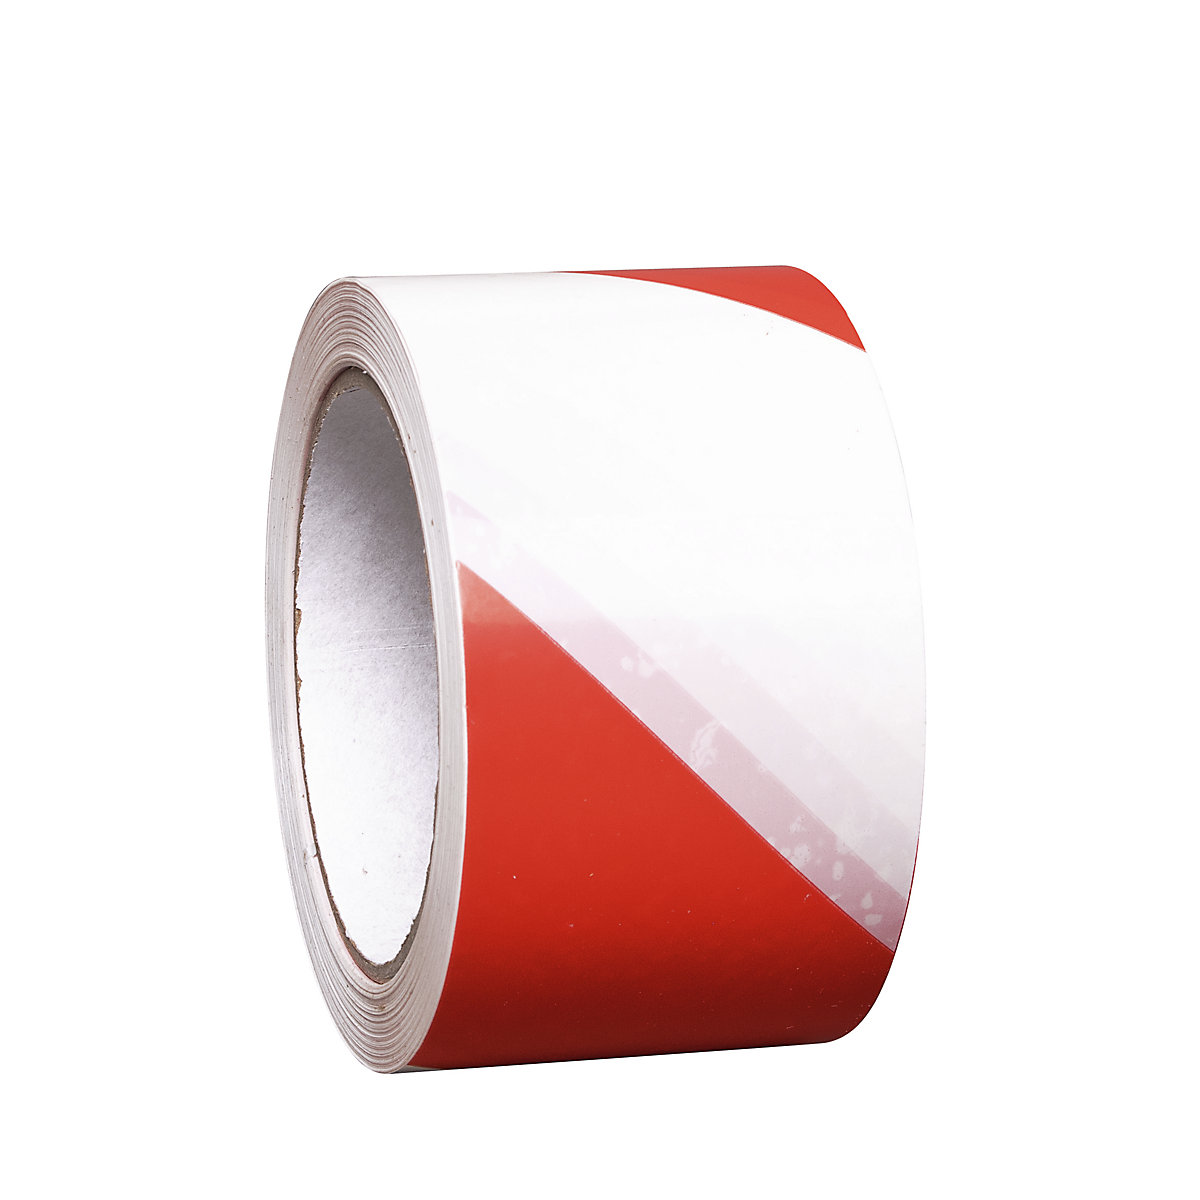 Podlahový značkovací pás z vinylu, dvoubarevný, šířka 75 mm, červená / bílá, bal.j. 16 rolí-7